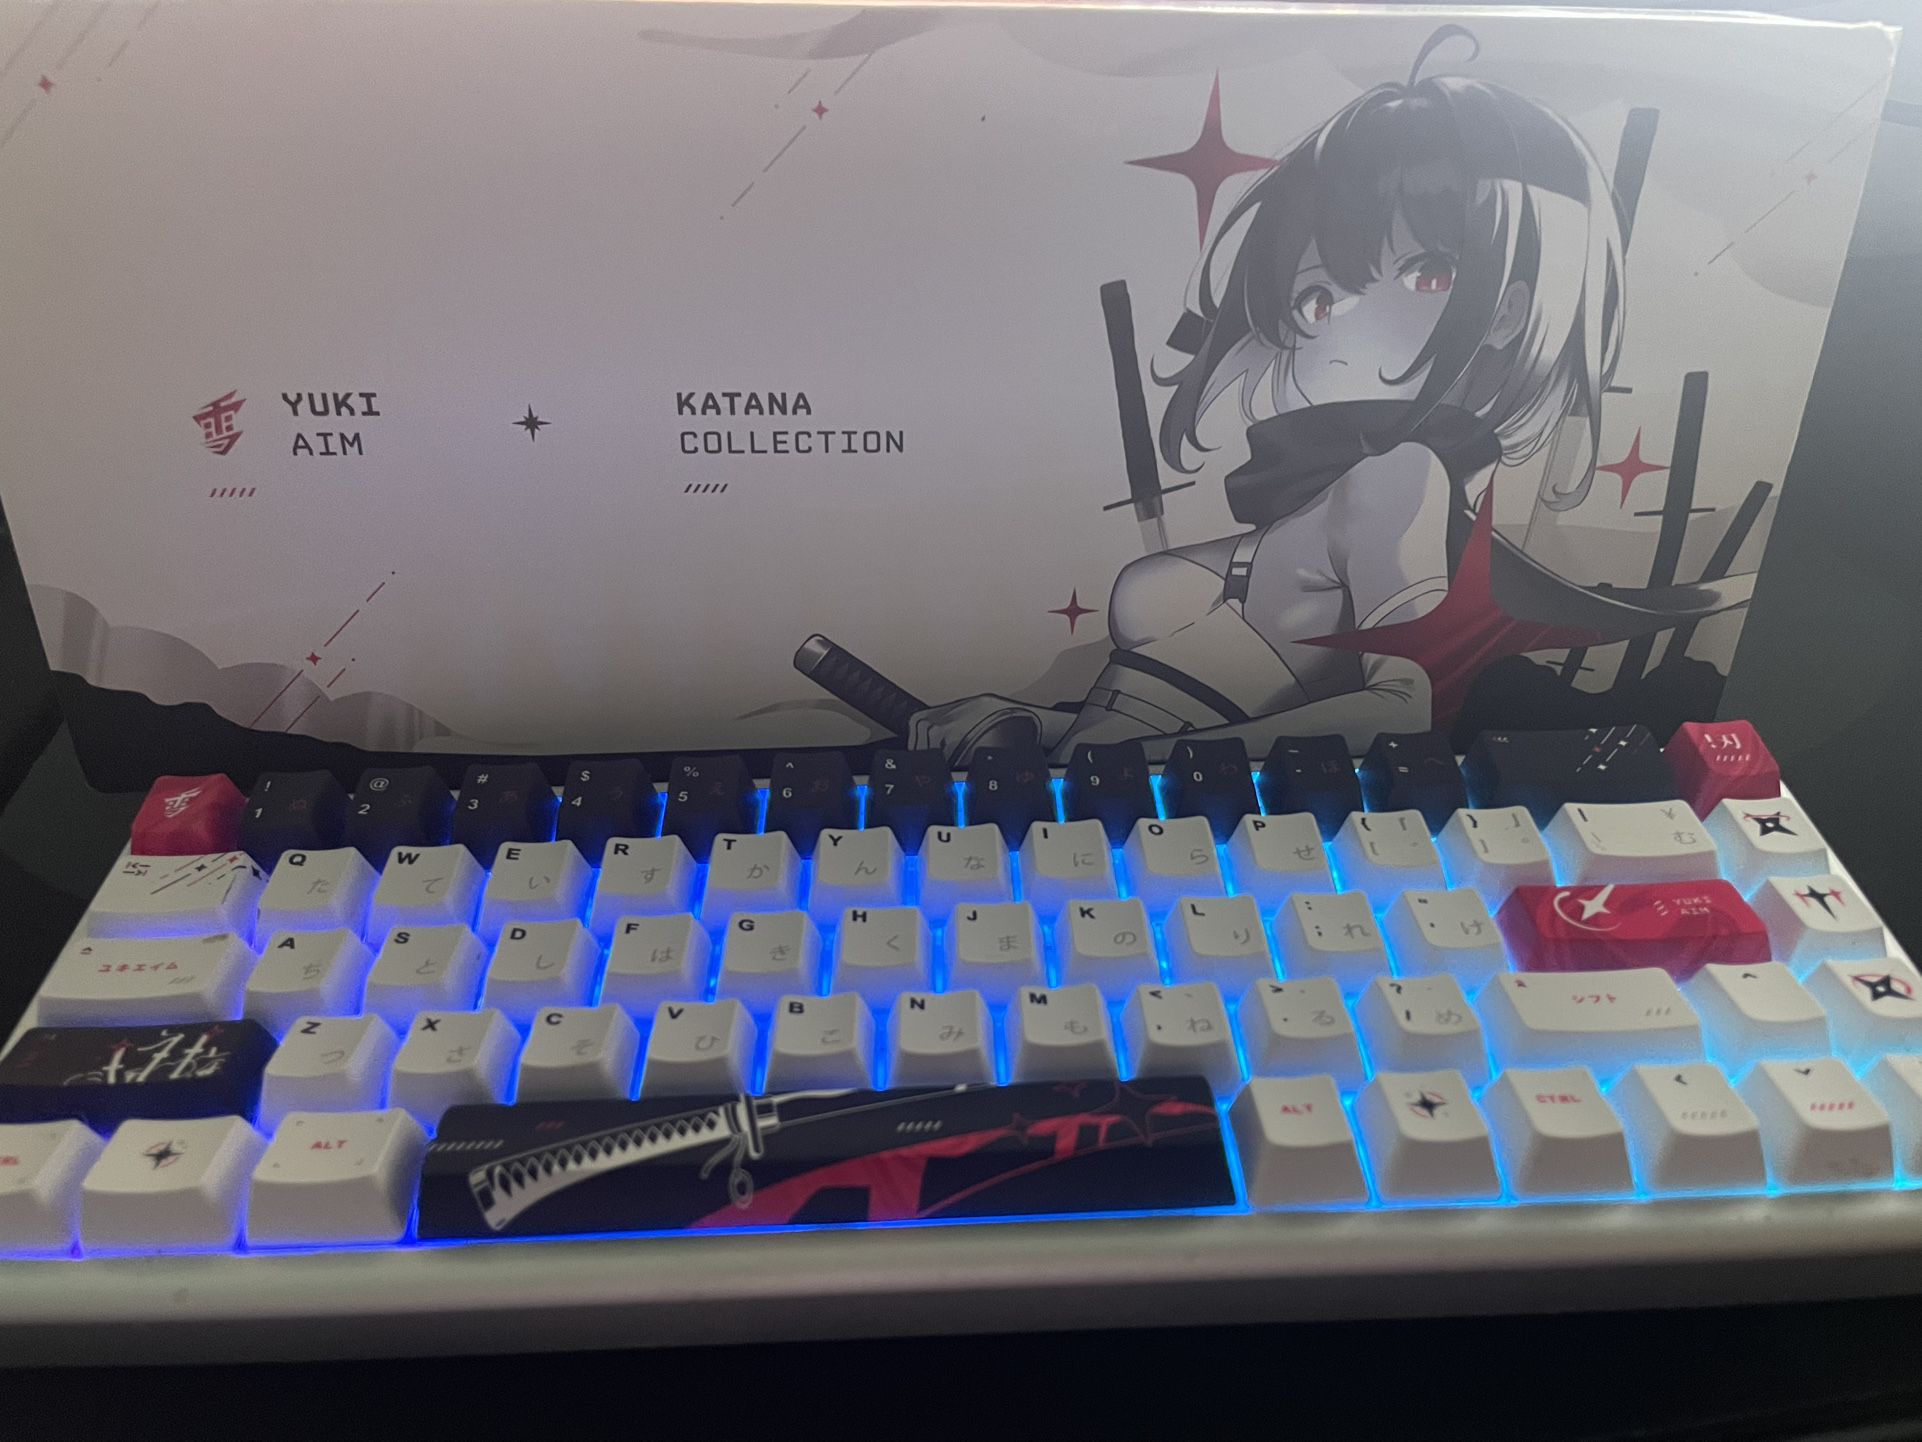 Yuki Aim 65% HE Rapid Trigger Aluminum Keyboard Hotswappable